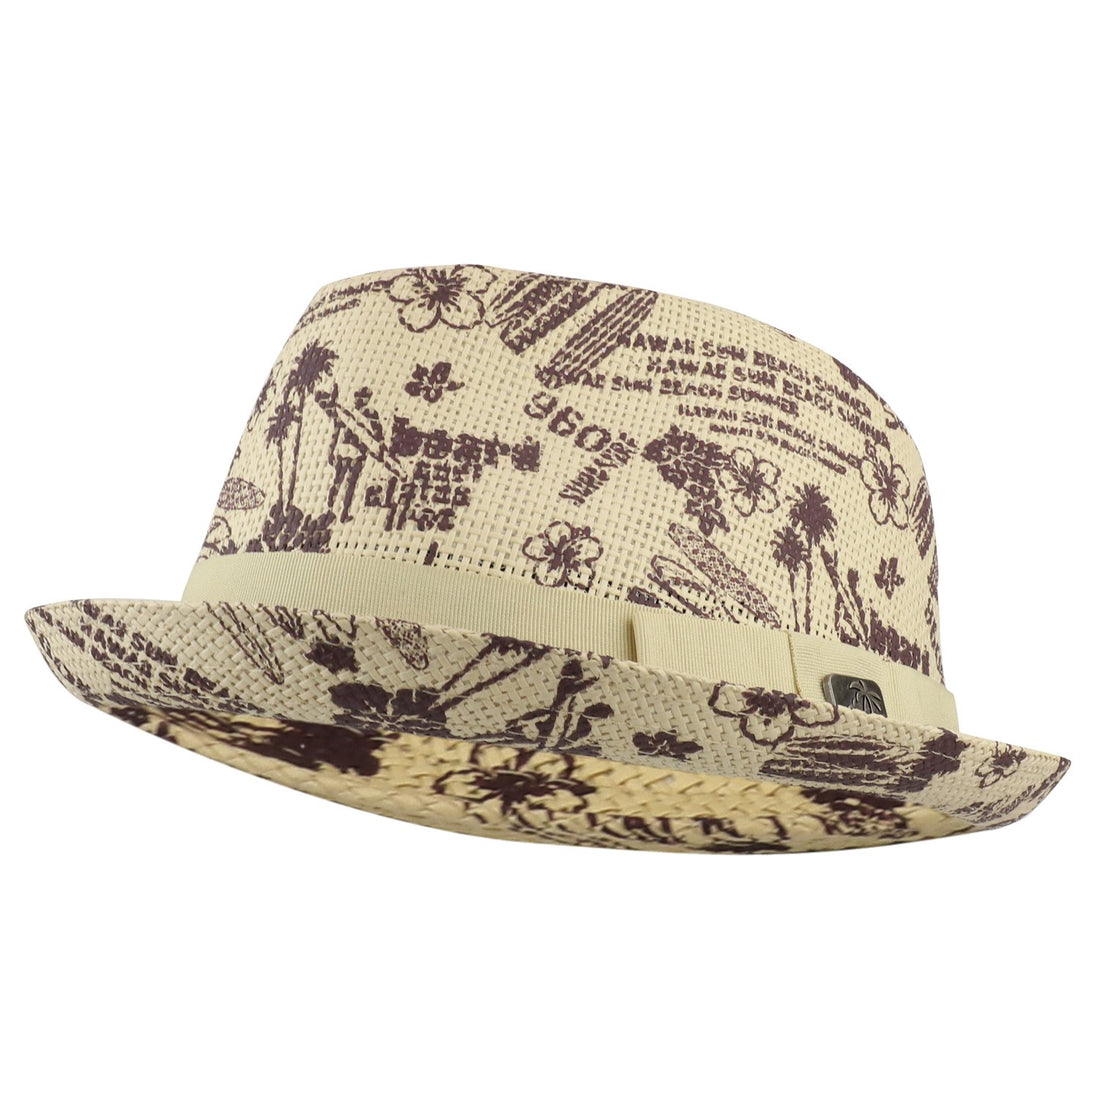 Trendy Apparel Shop Tropical Beach Printed Straw Fedora Hat